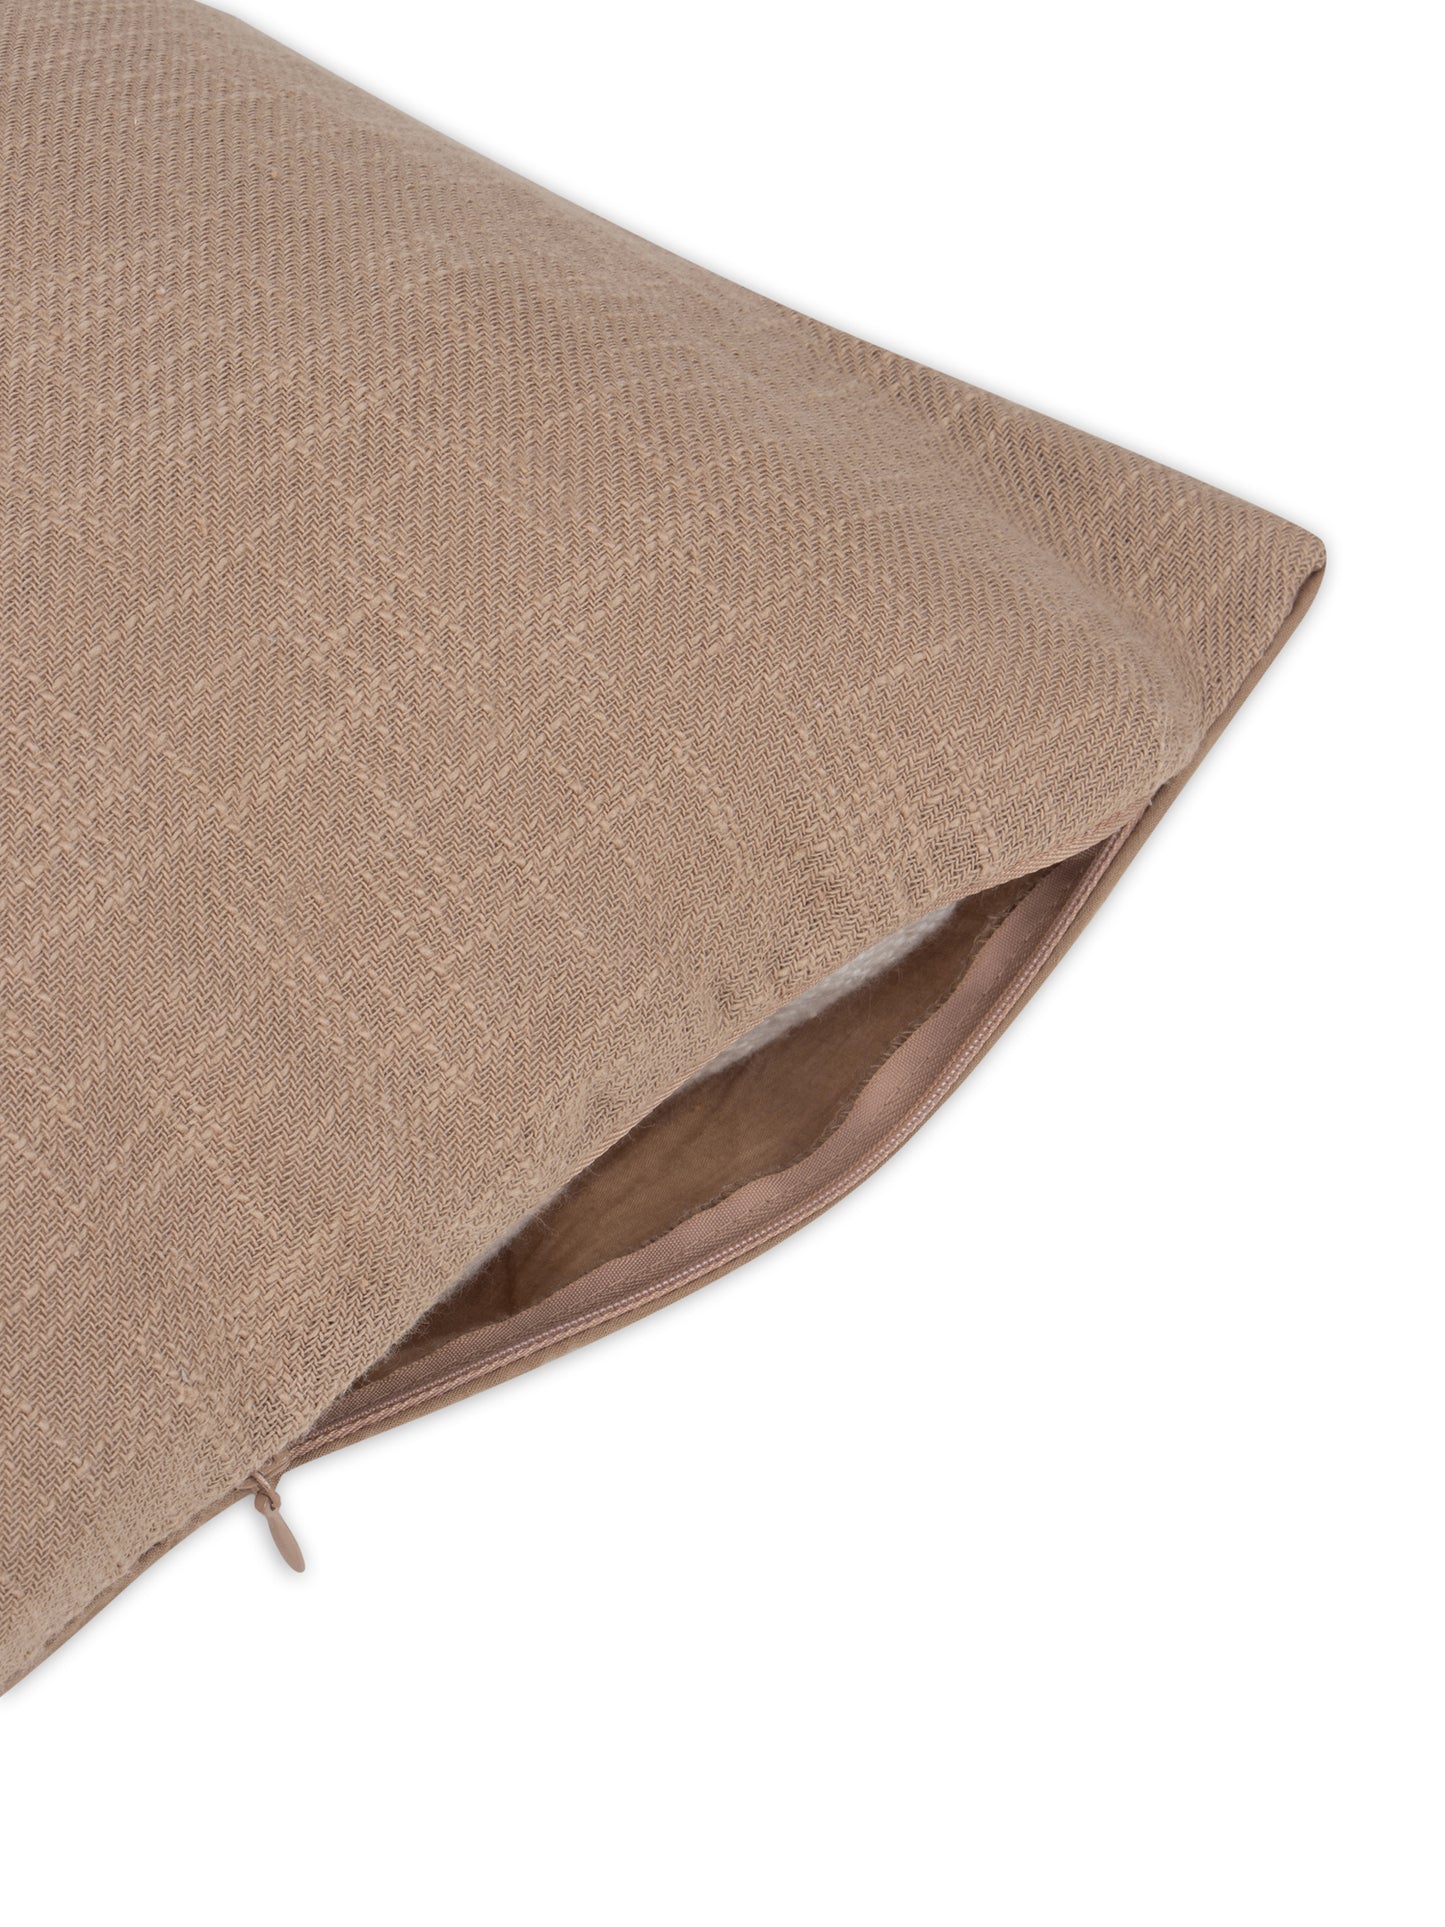 Hazelnut Brown Cotton slub cushion cover